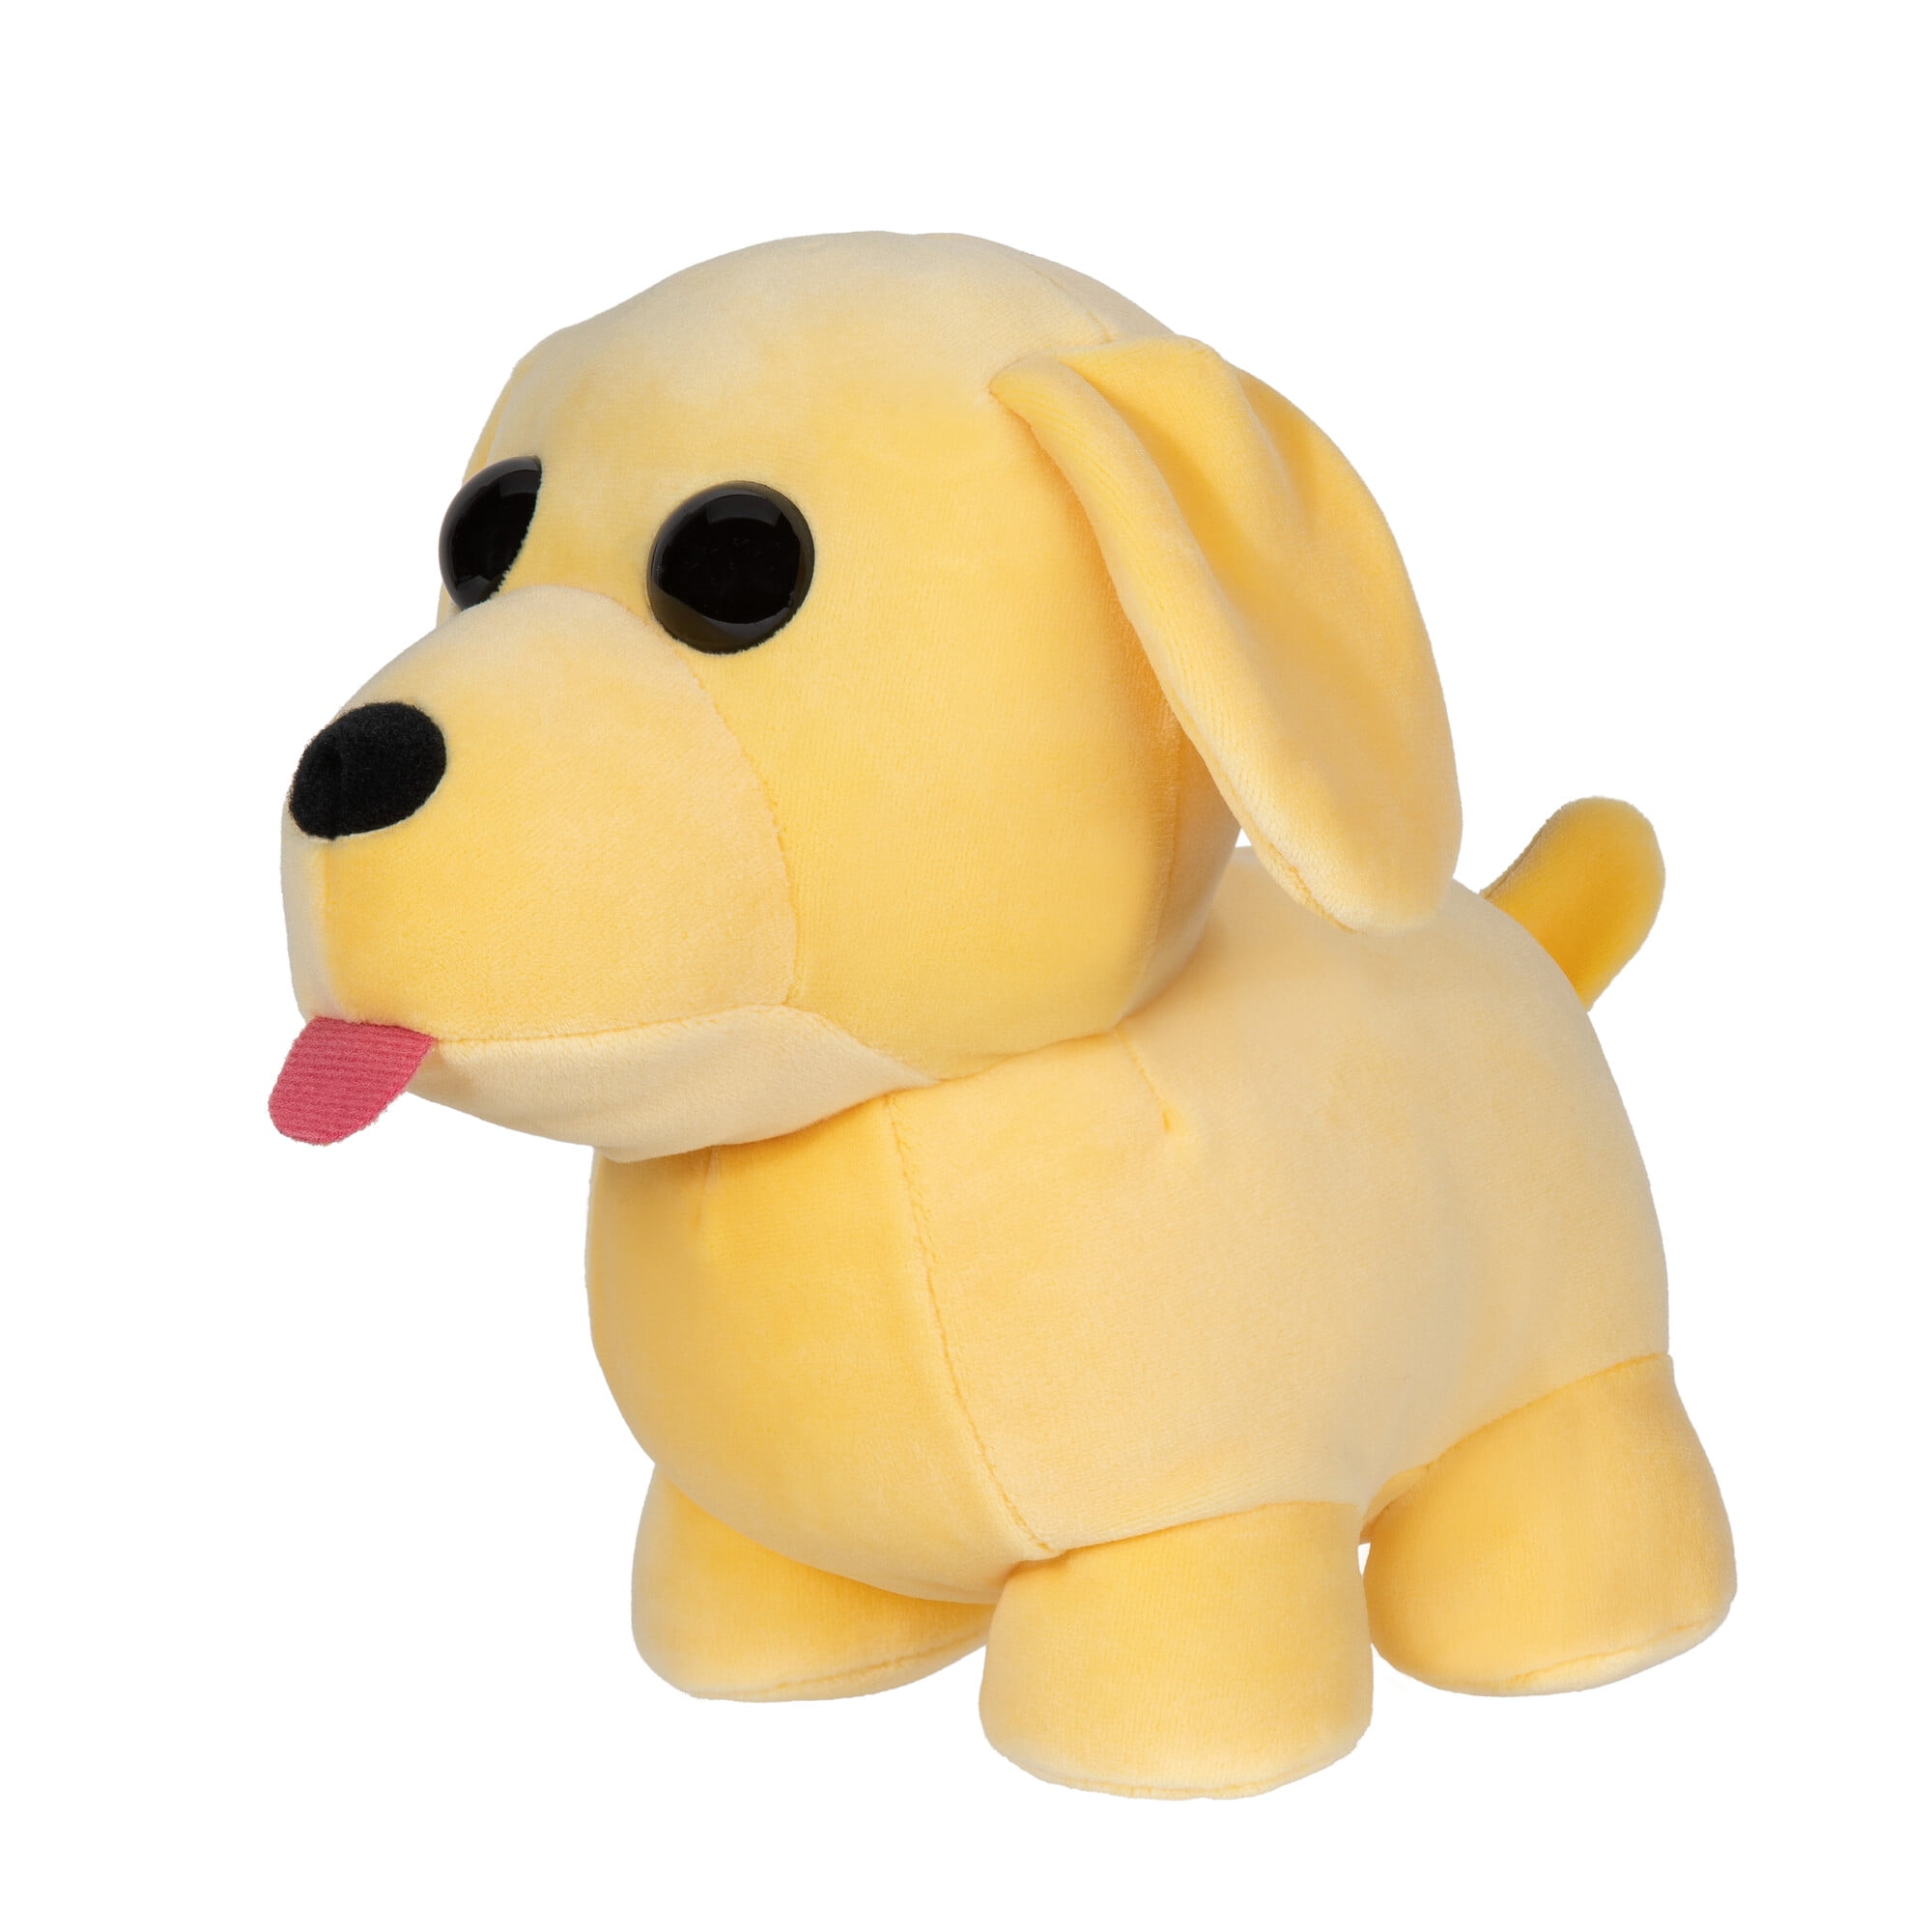 Adopt Me! 8 Collector Plush Pet Dog, Stuffed Animal Plush Toy